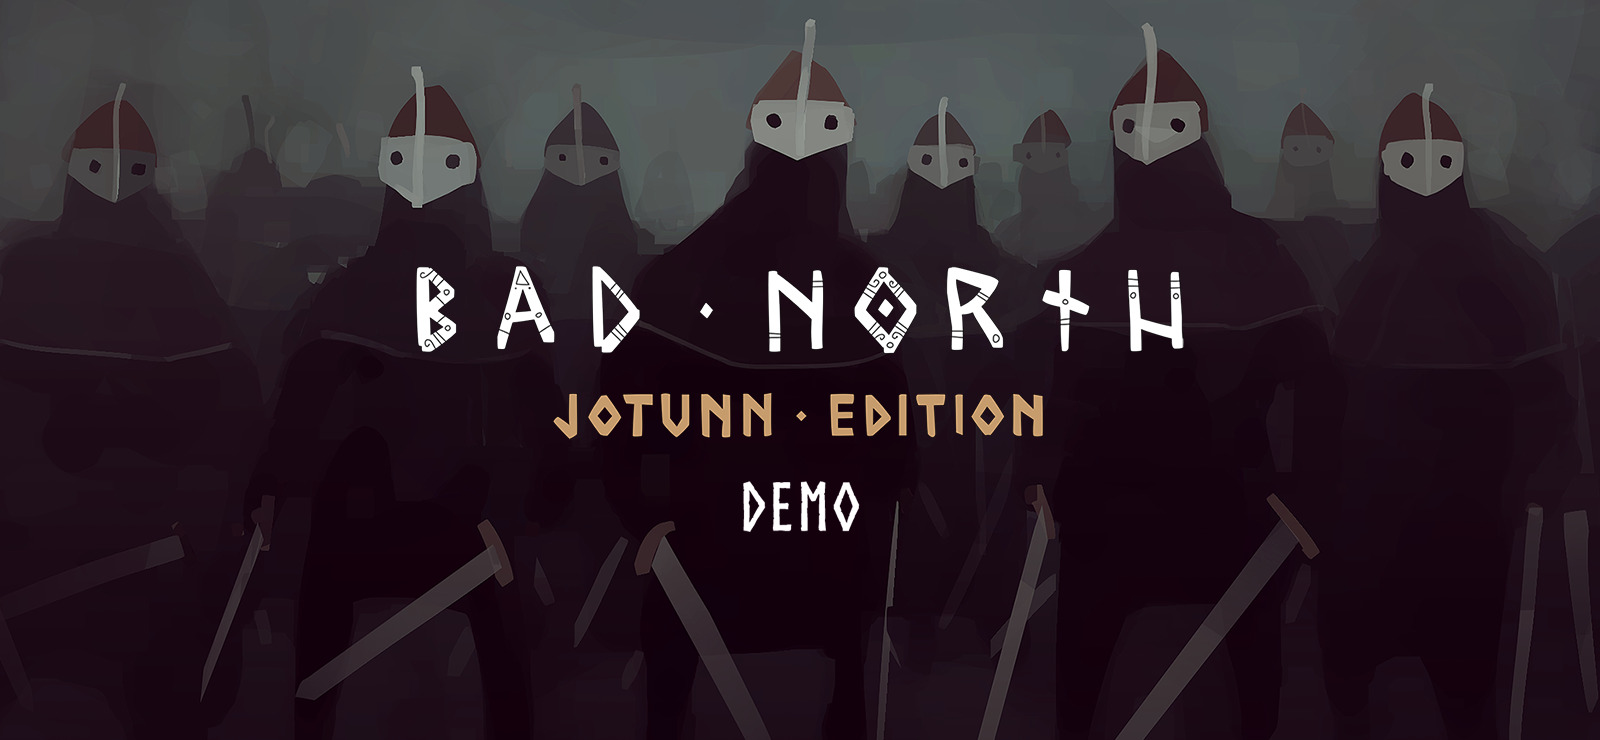 Bad North: Jotunn Edition (Multi) é o jogo gratuito da semana na